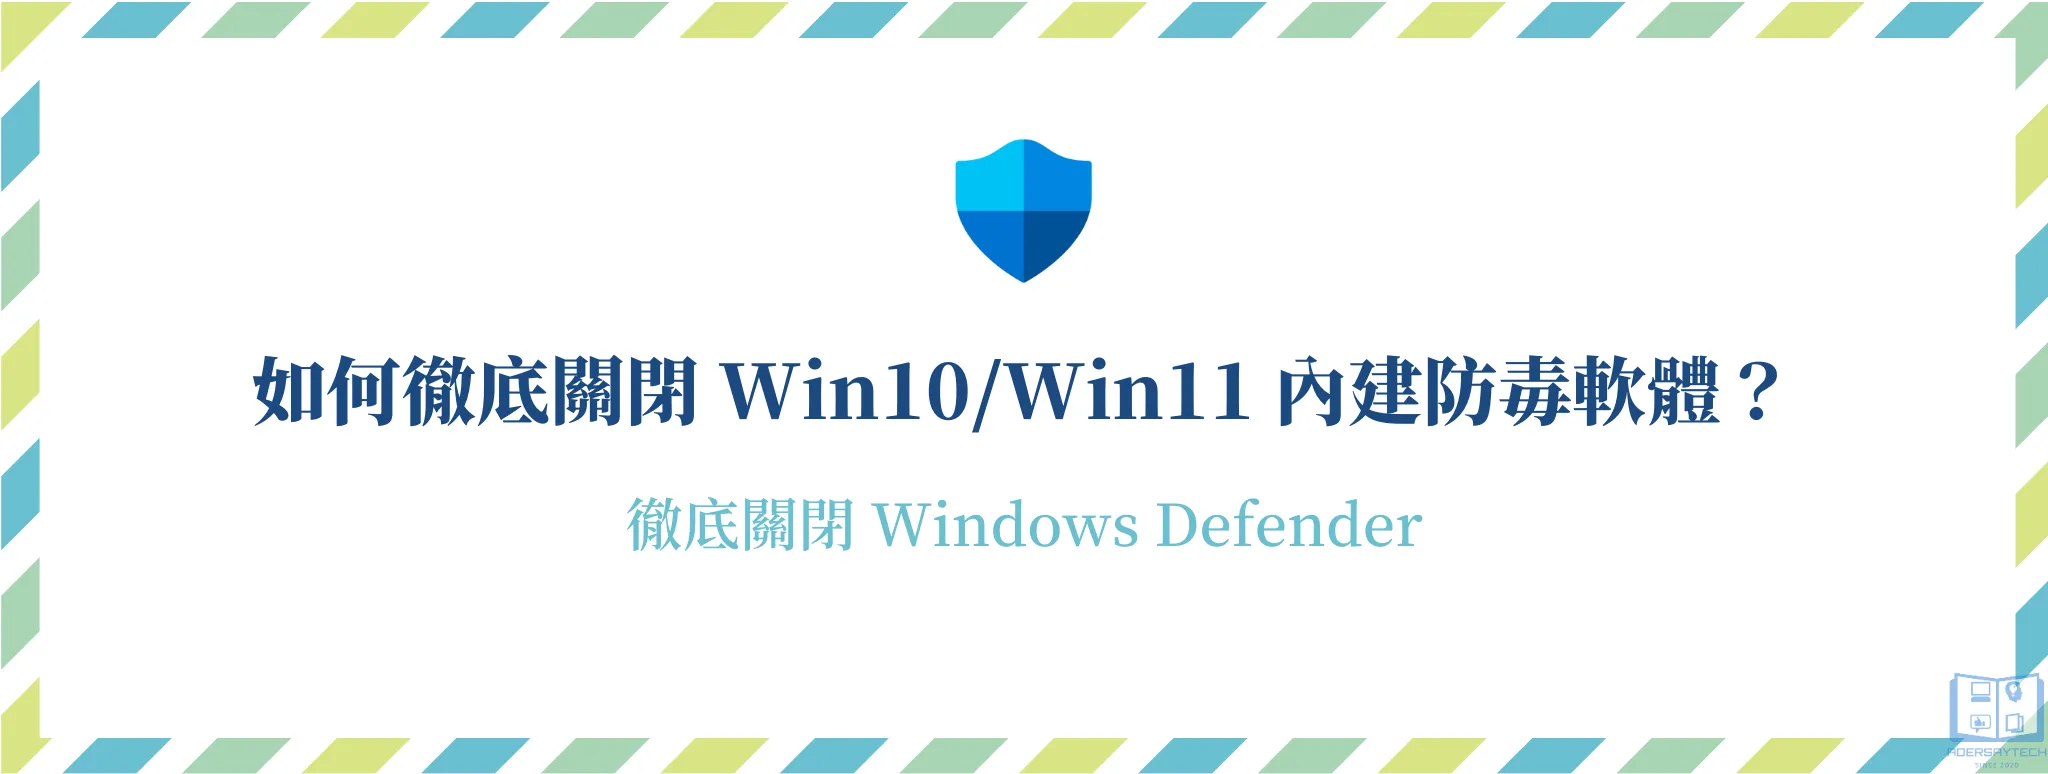 如何完全關閉 Windows Defender (內建防毒)？Win10/Win11 都適用！ 6